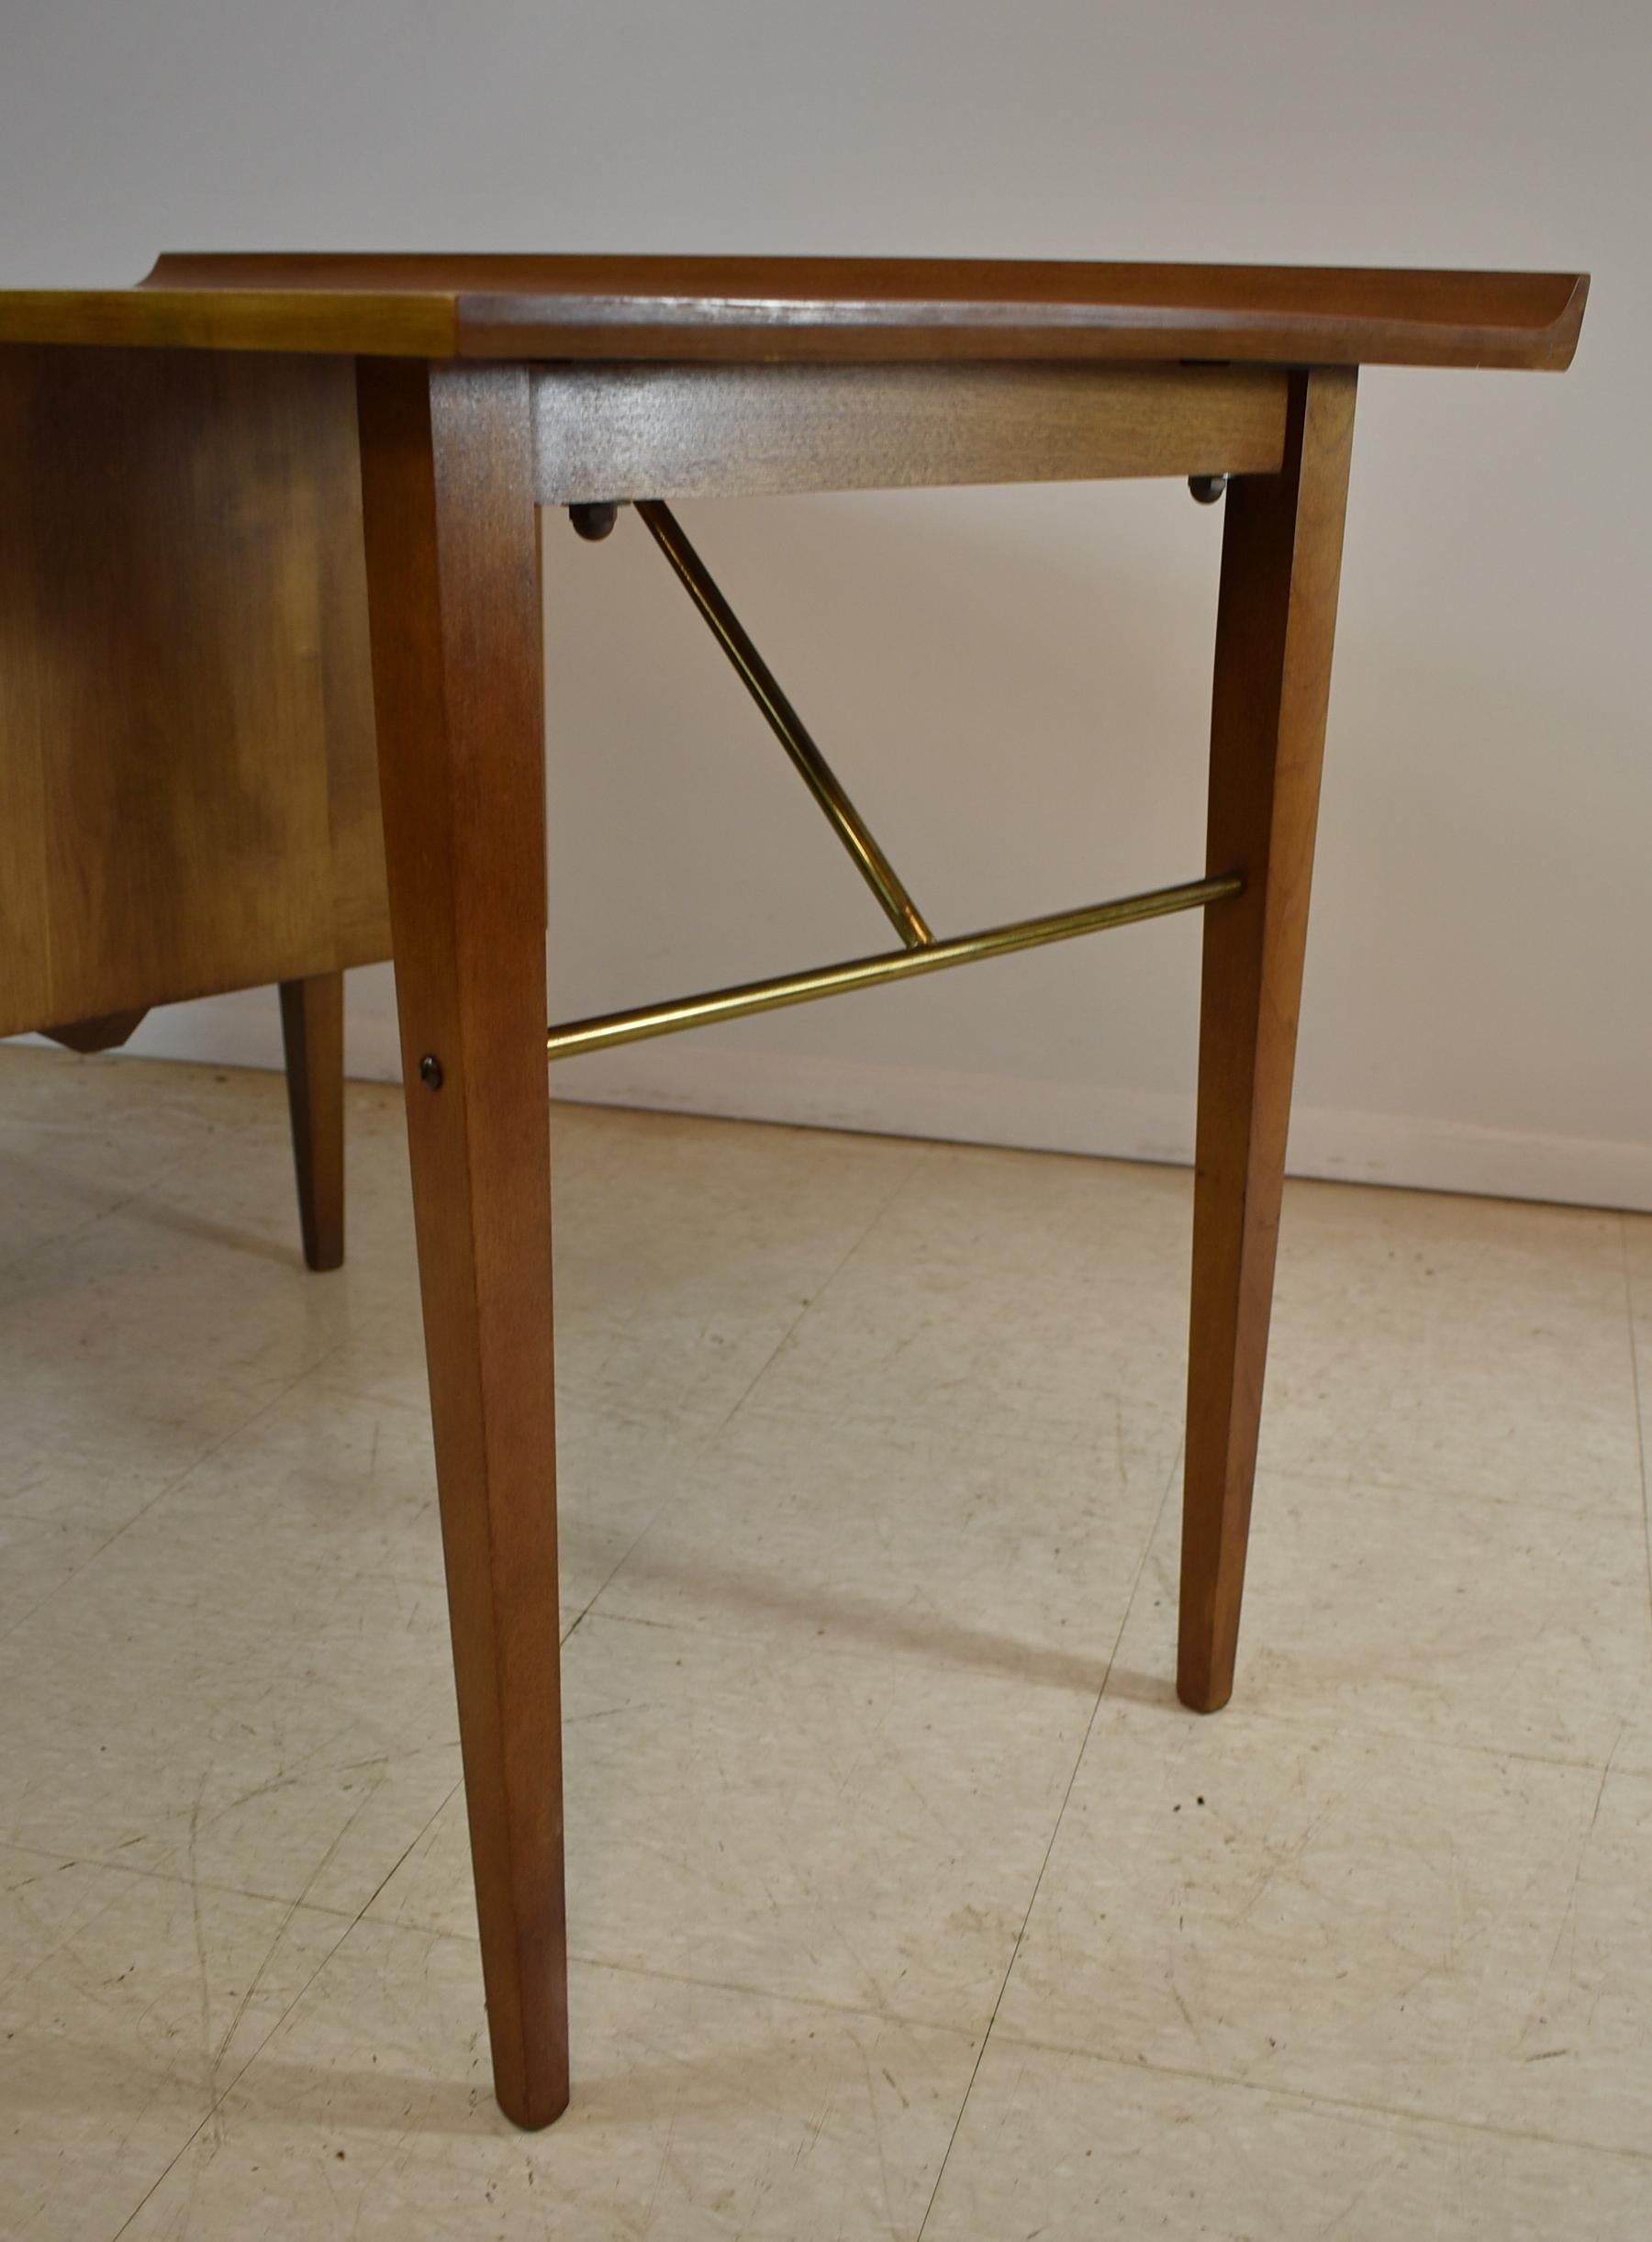 Mid-Century Modern Milo Baughman for Thayer Coggin birch and laminate desk, circa 1950s. Very nice condition. 48